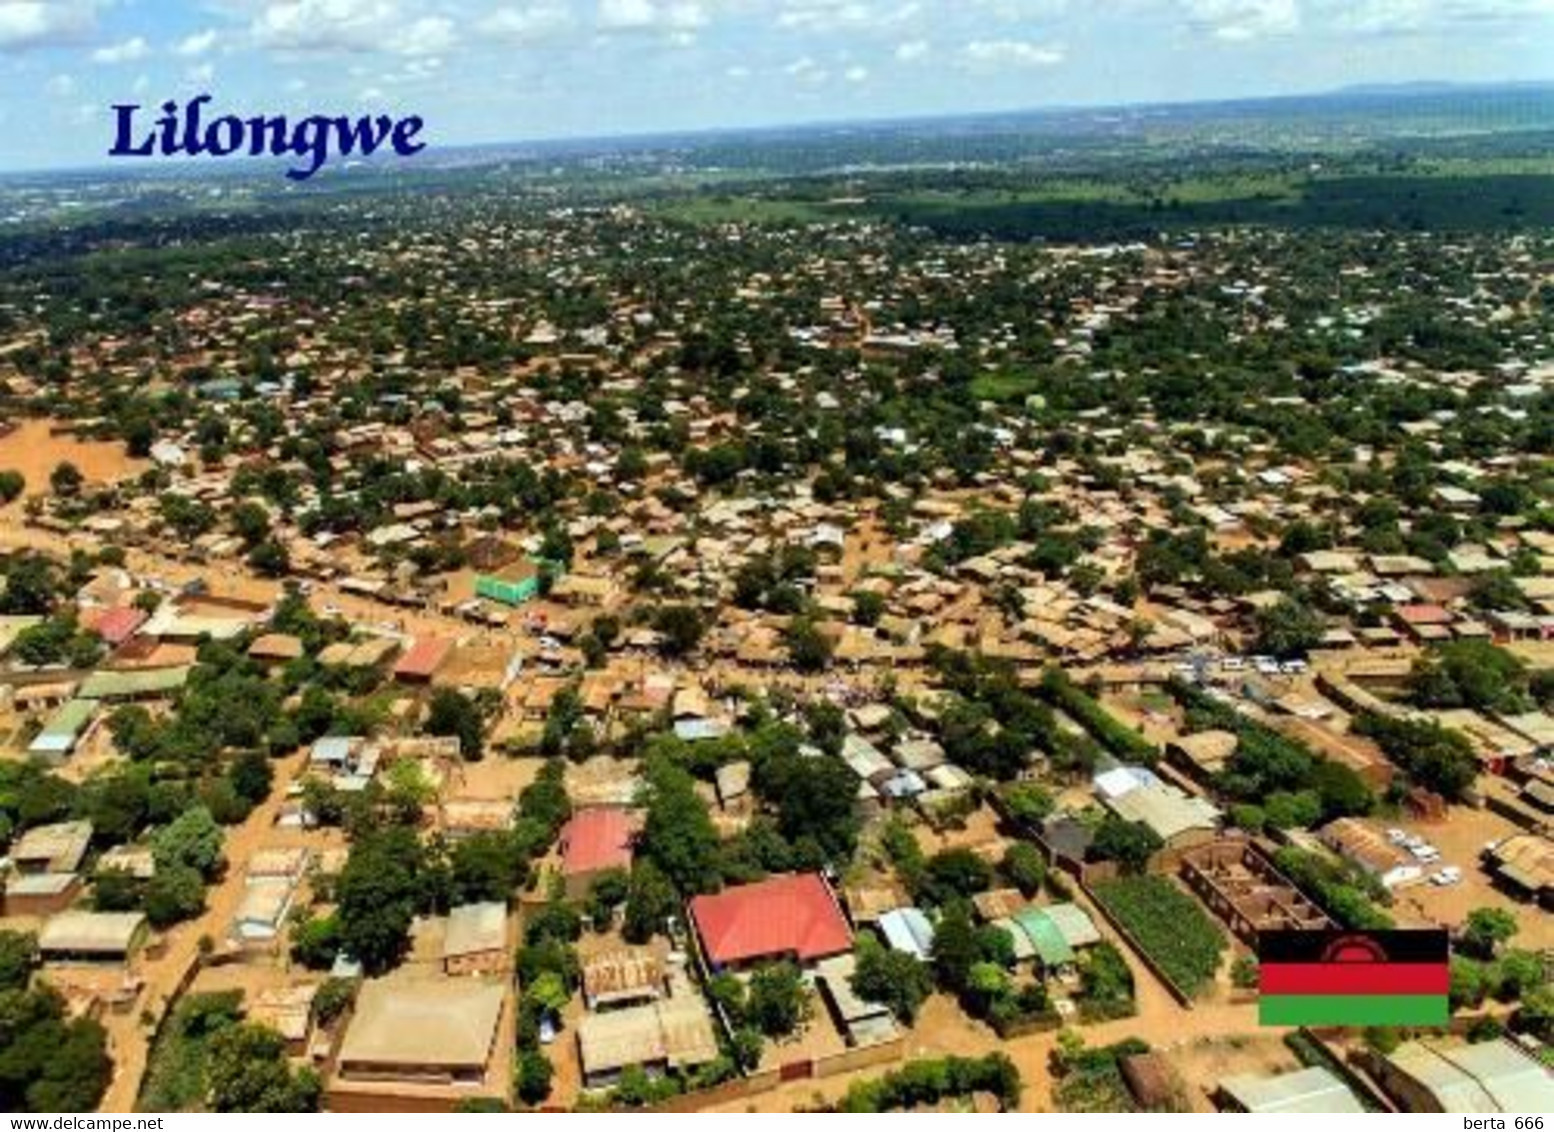 Malawi Lilongwe Aerial View New Postcard - Malawi